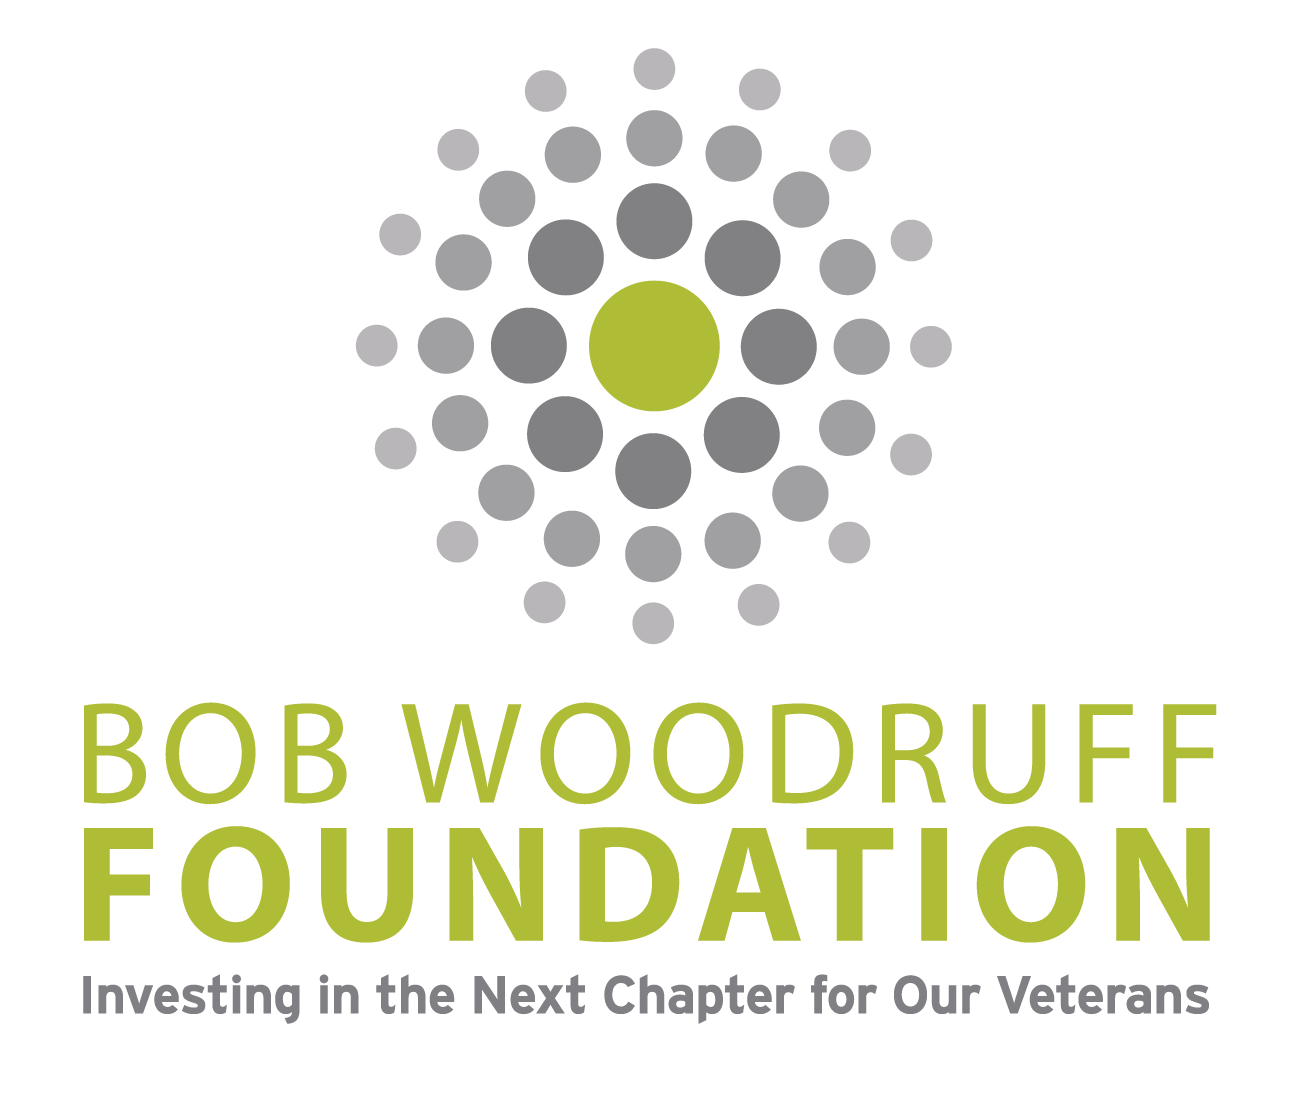 The Bob Woodruff Fou